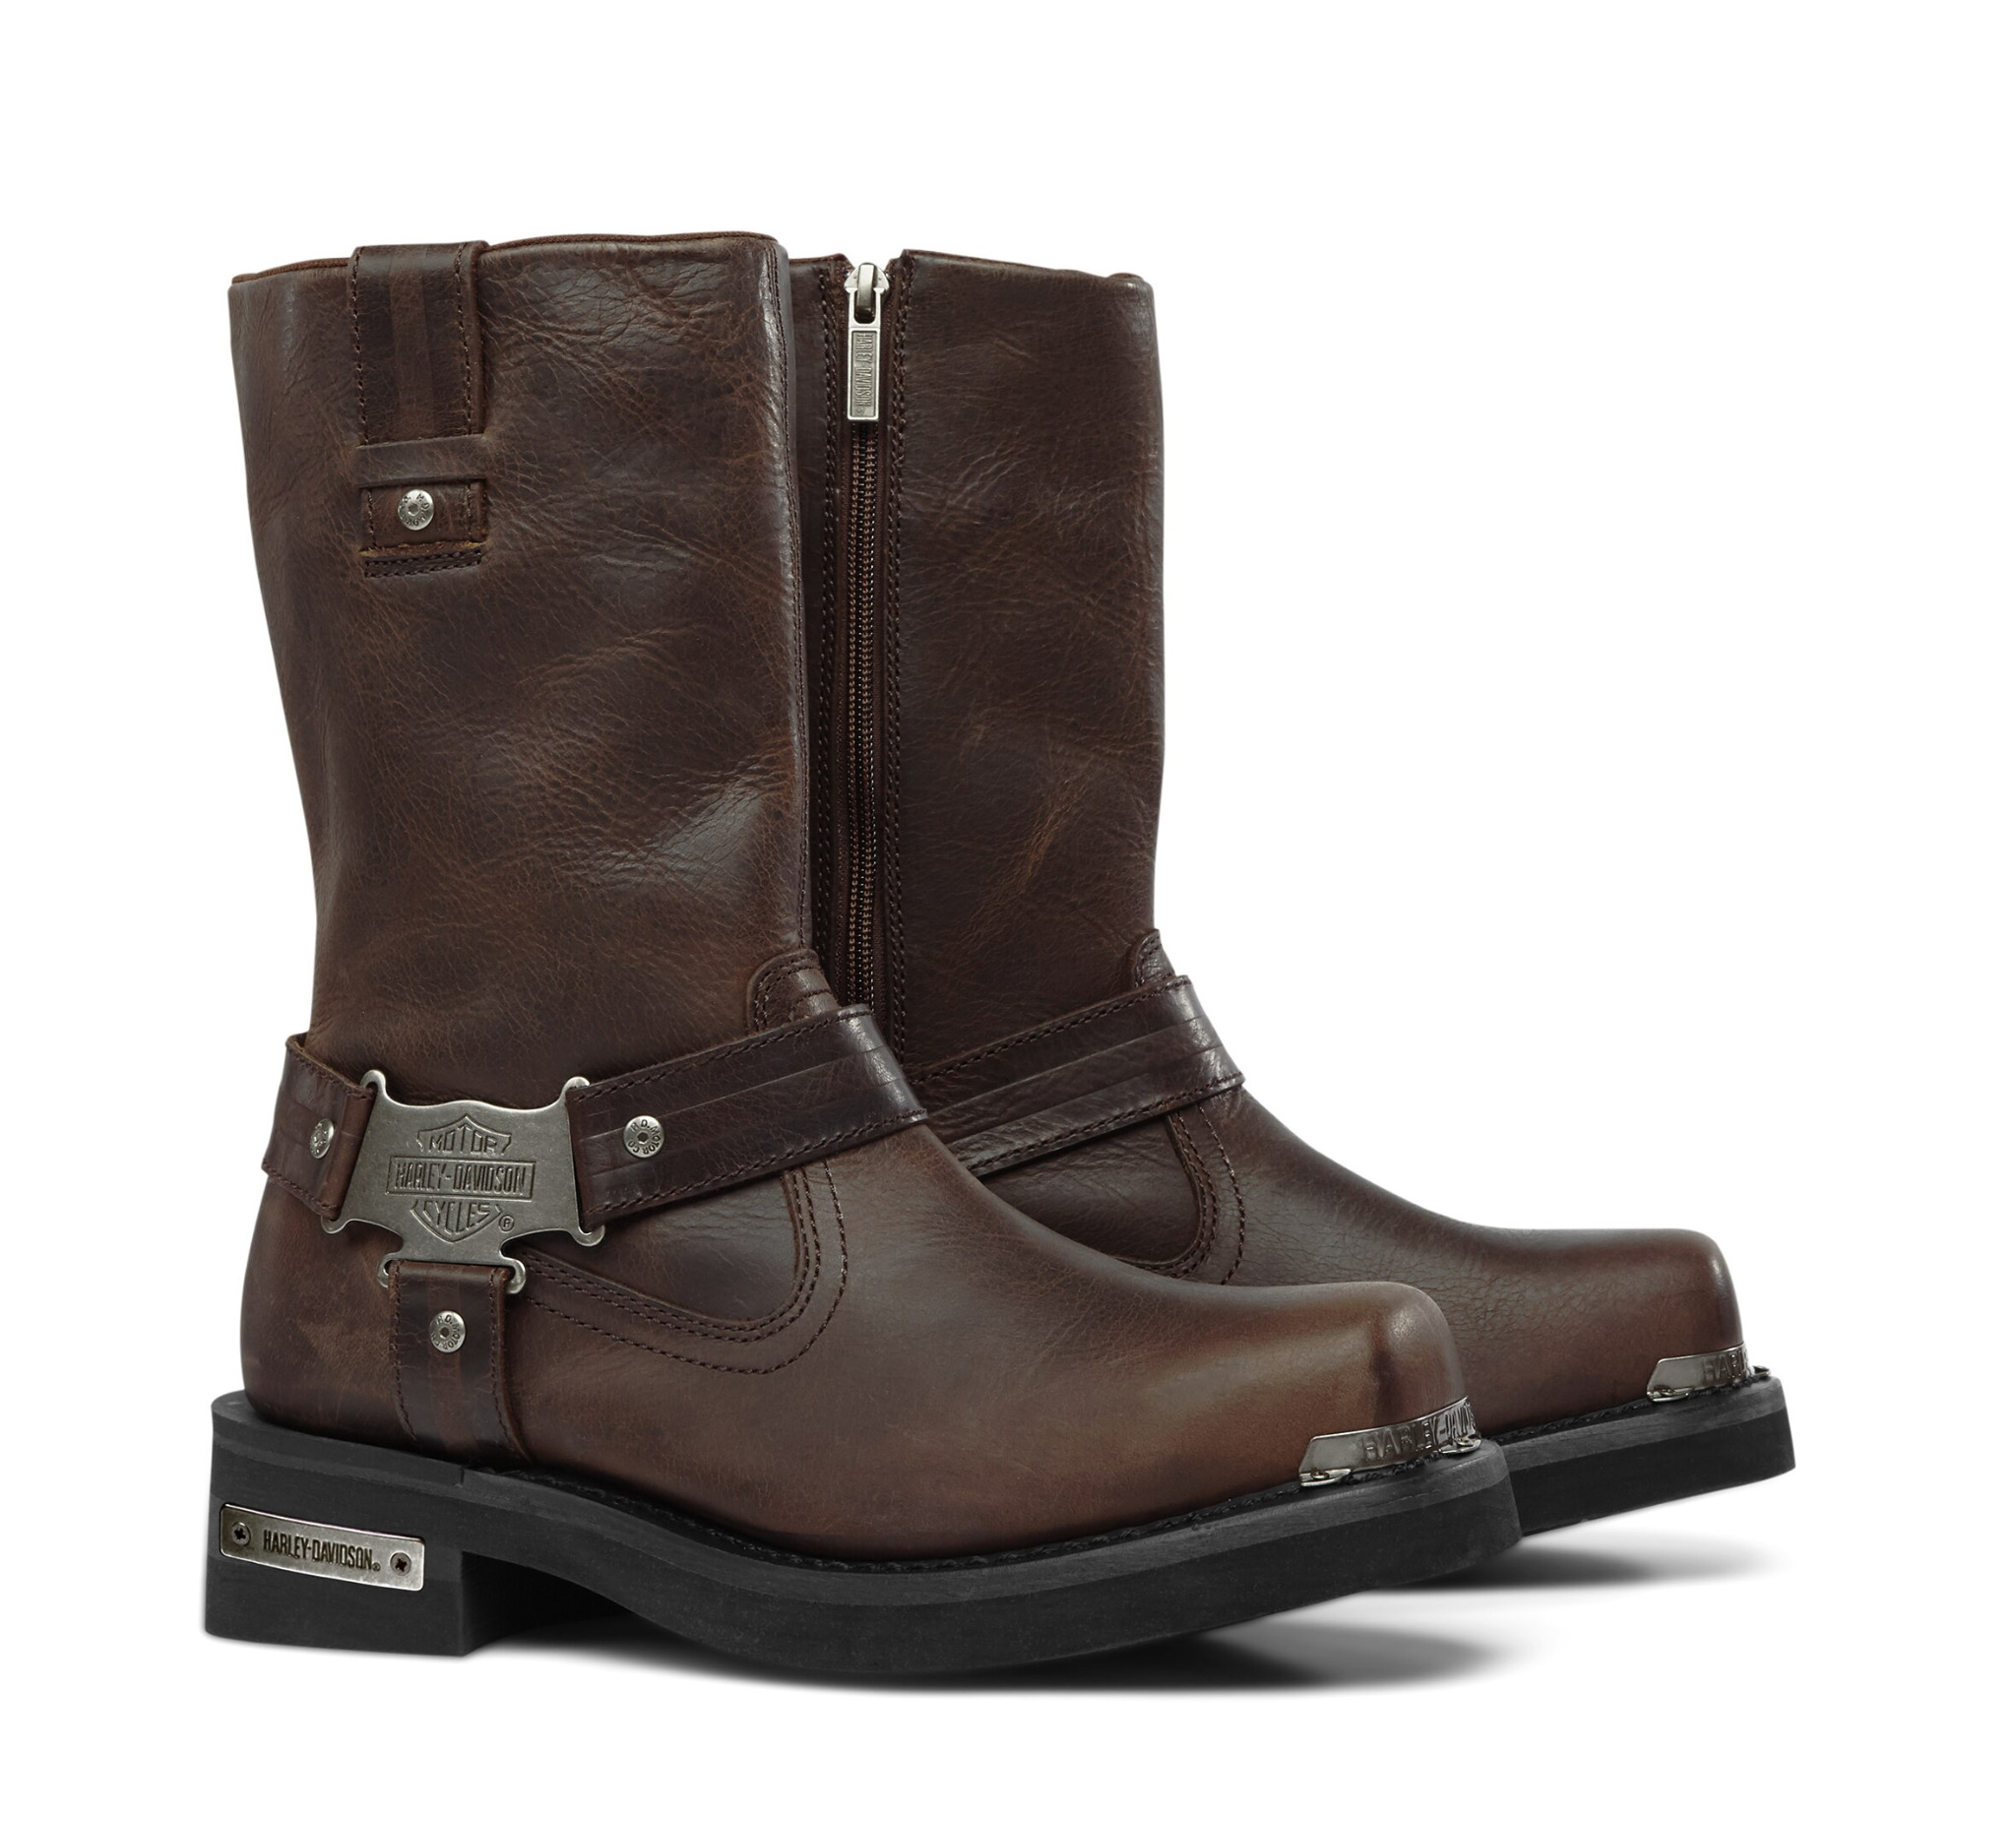 Buy > harley davidson boots brown > in stock